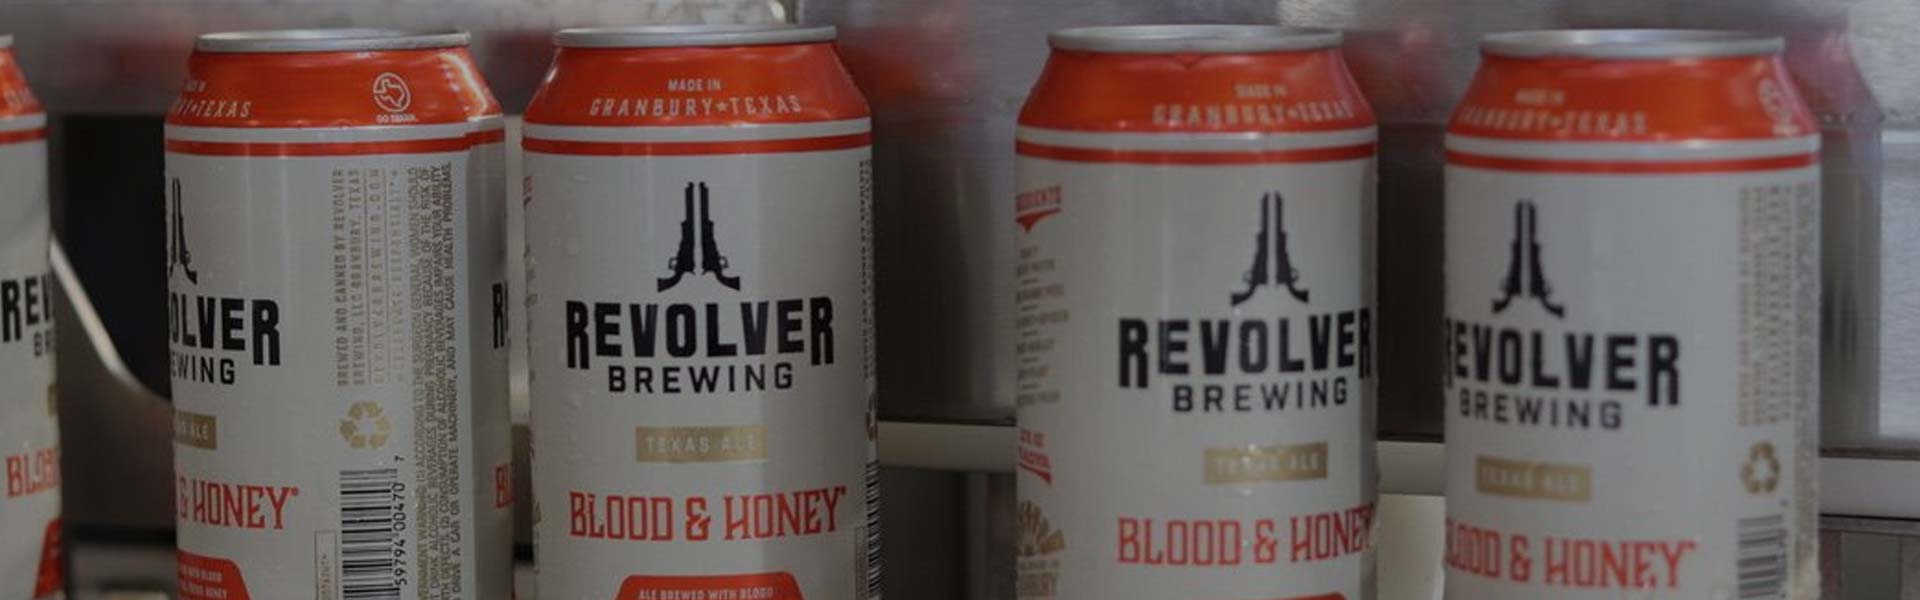 Revolver beer background